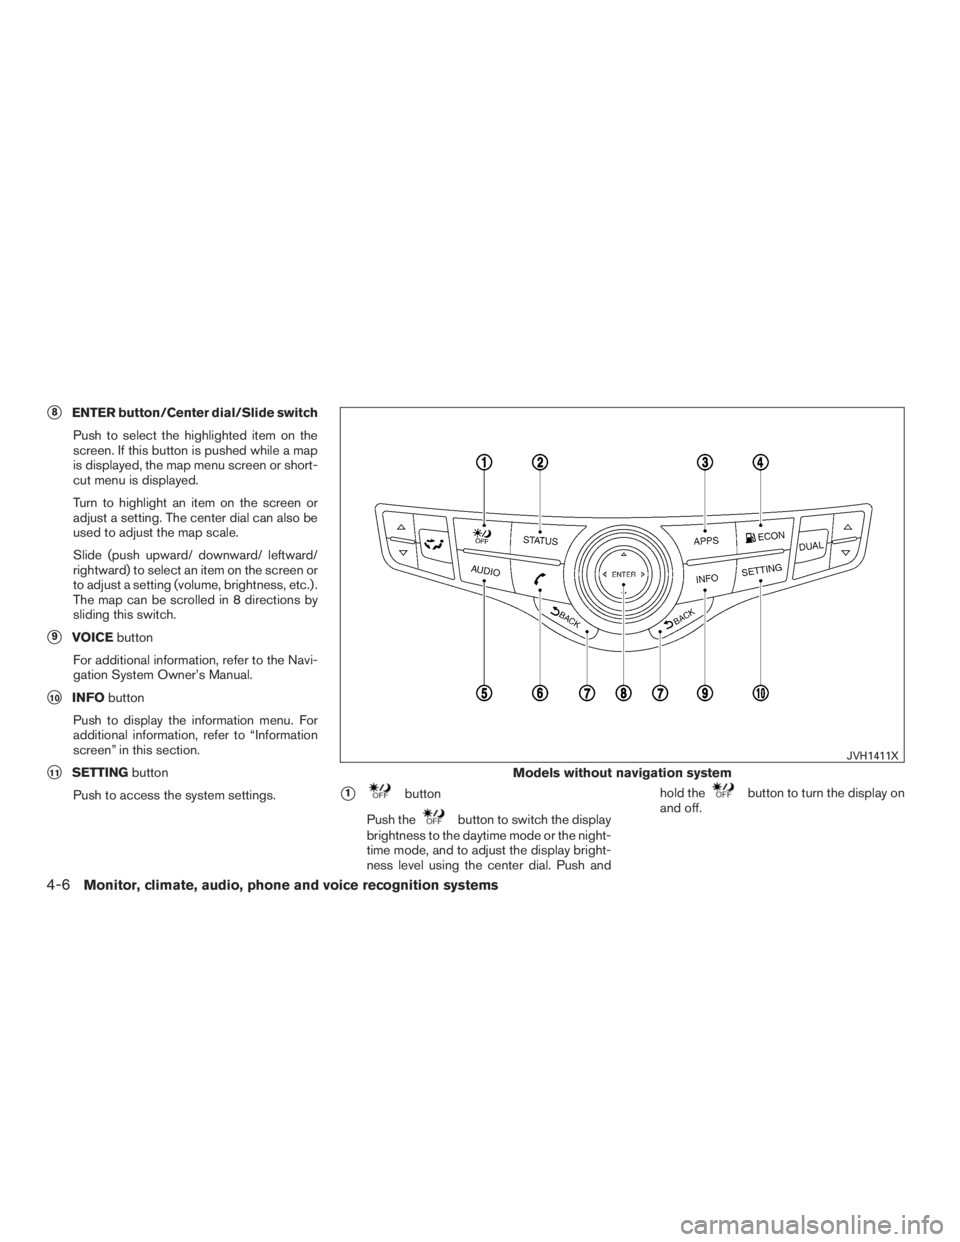 INFINITI QX60 2017  Owners Manual 8ENTER button/Center dial/Slide switchPush to select the highlighted item on the
screen. If this button is pushed while a map
is displayed, the map menu screen or short-
cut menu is displayed.
Turn t